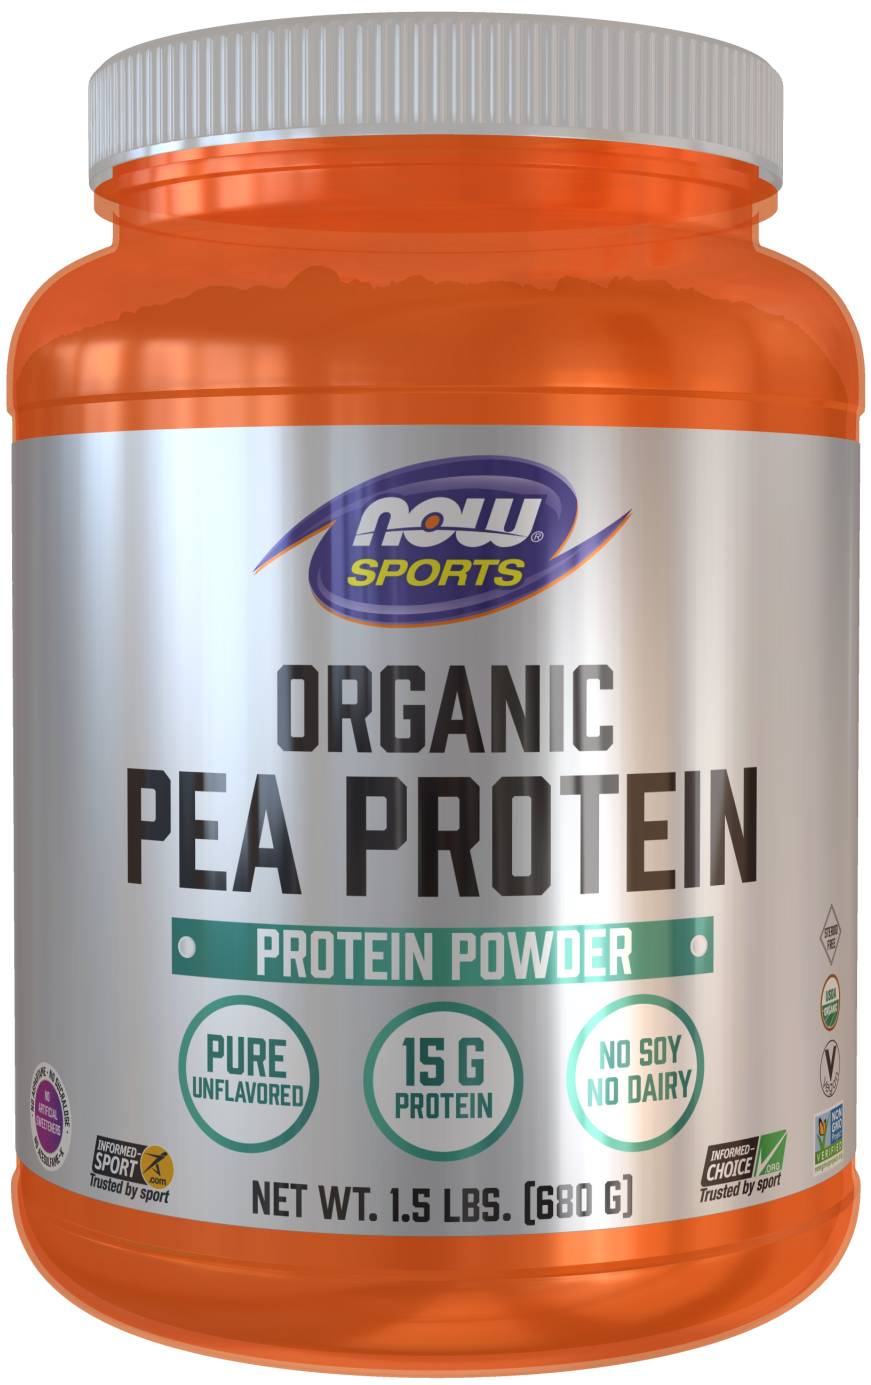 Pea Protein Powder Organic